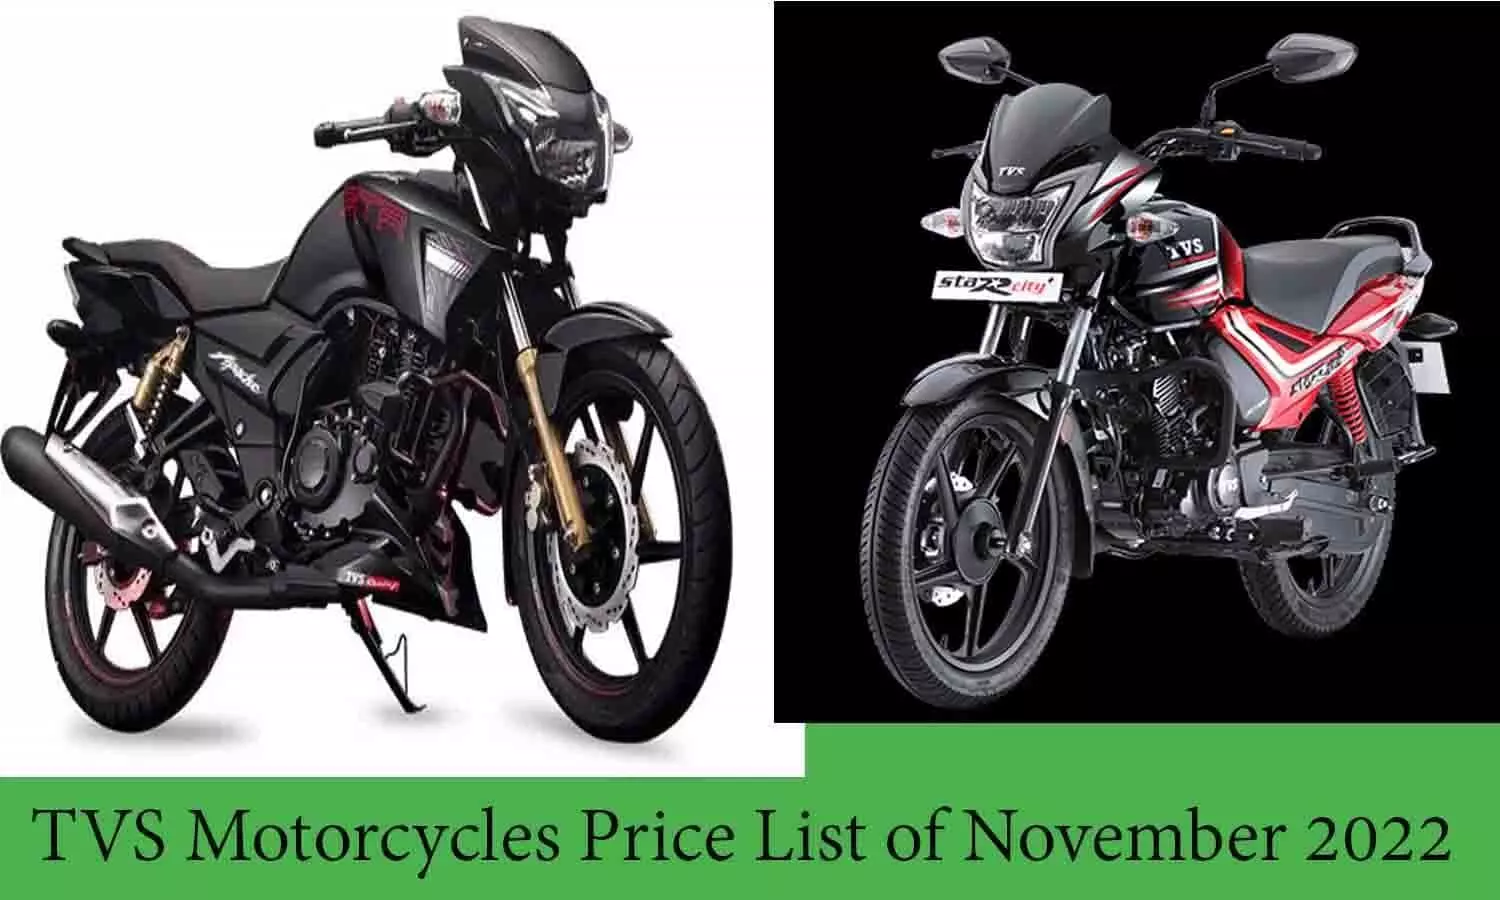 TVS Motorcycles Price List of November 2022: TVS Apache, TVS Raider से लेकर TVS Sport और TVS Star City Plus की नई कीमत, एक क्लिक में यहाँ से जाने